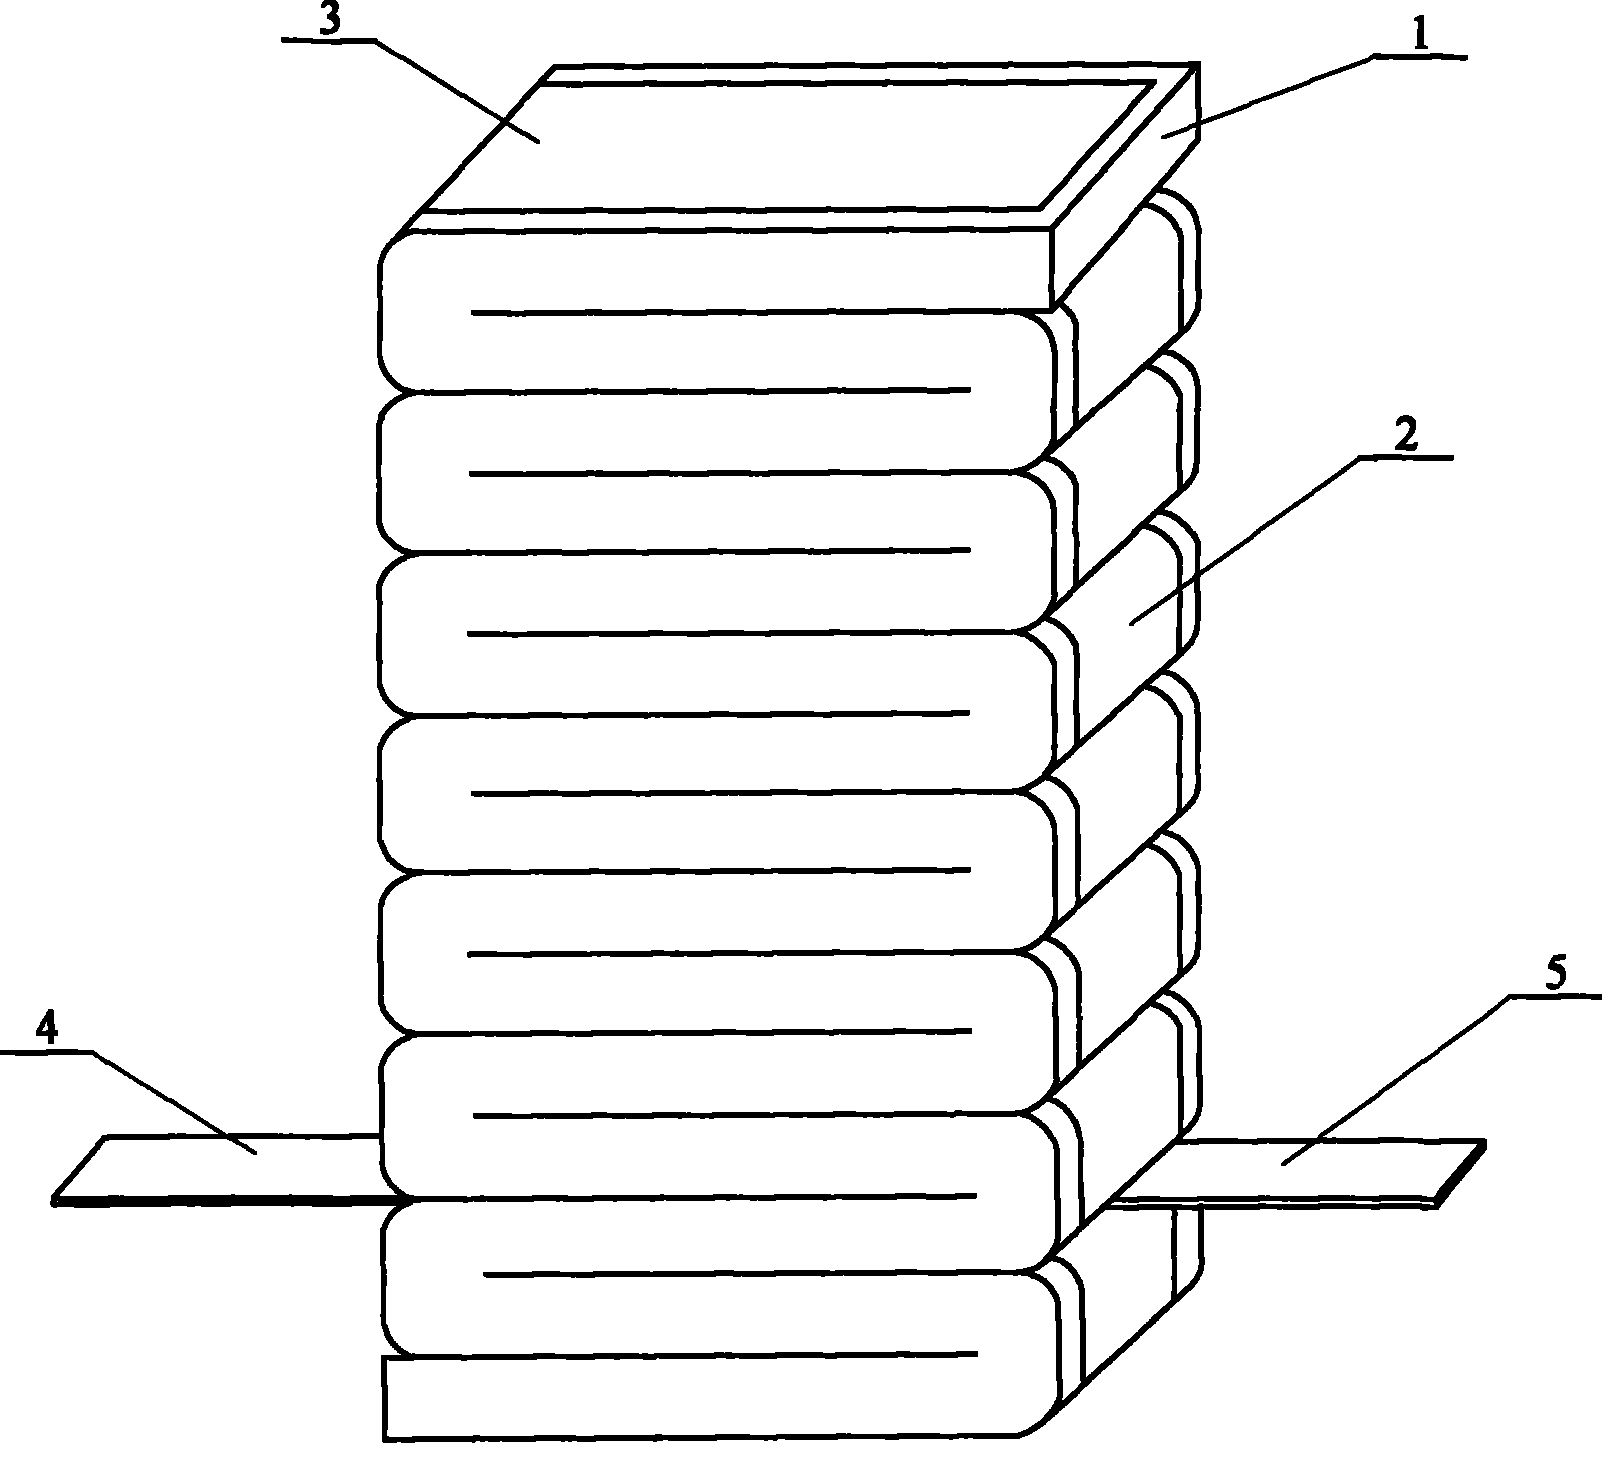 Dielectric elastomer folding-shaped driver making method